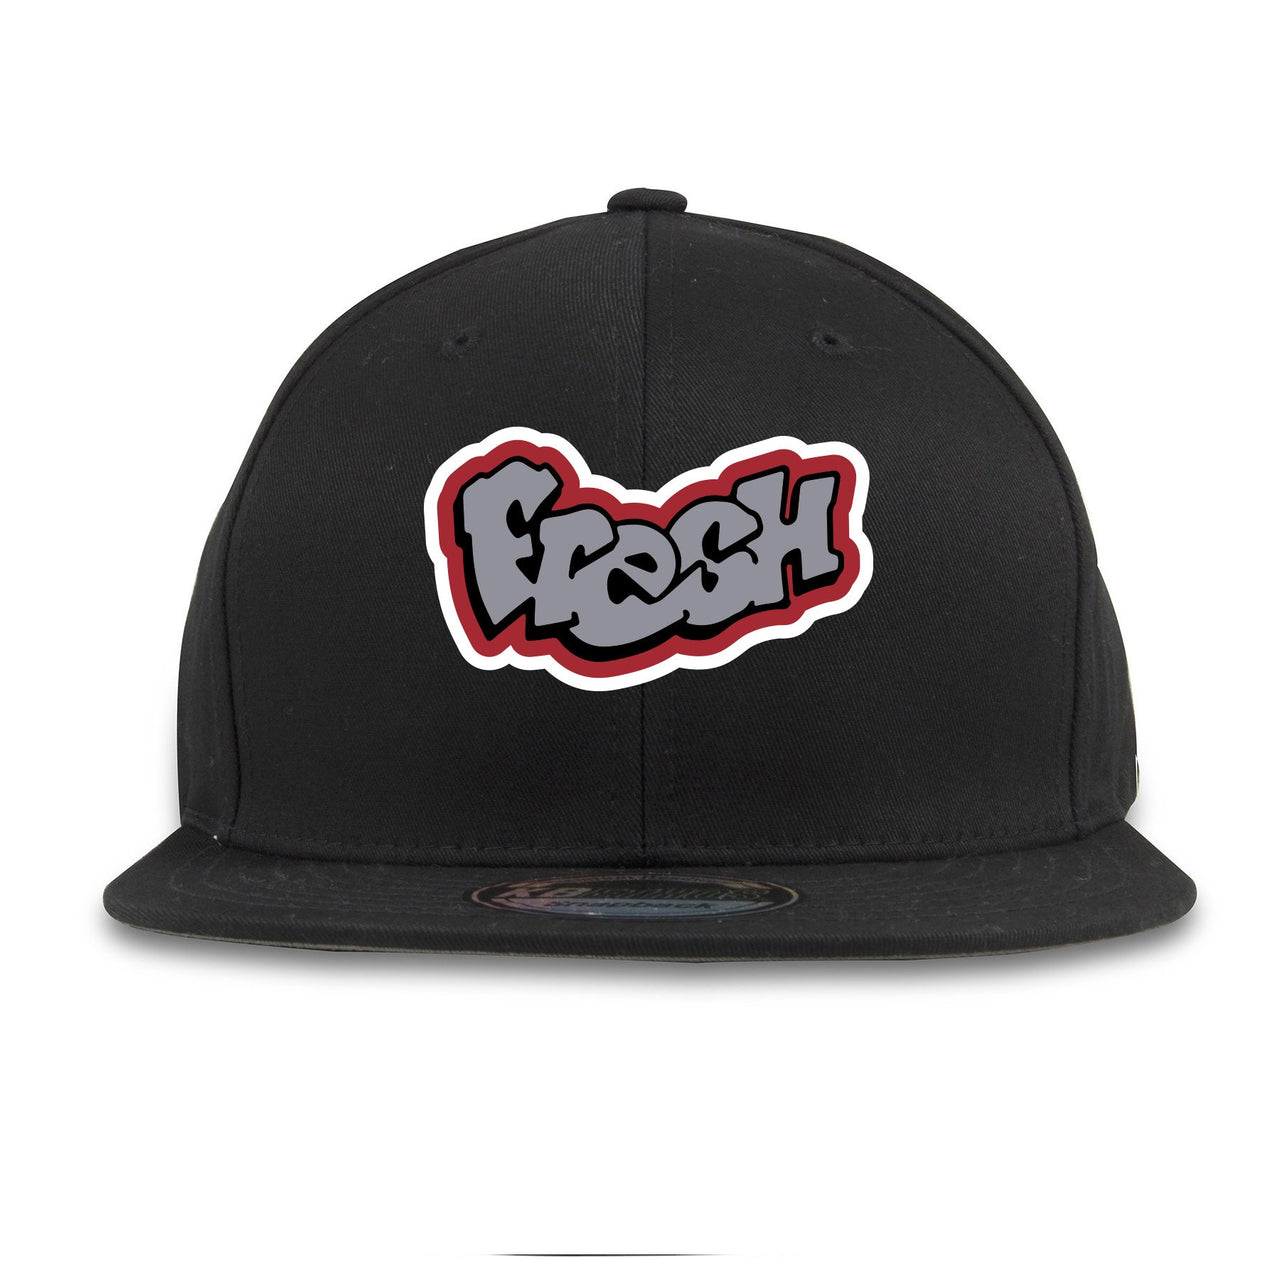 Bred 2019 4s Snapback | Fresh Logo, Black